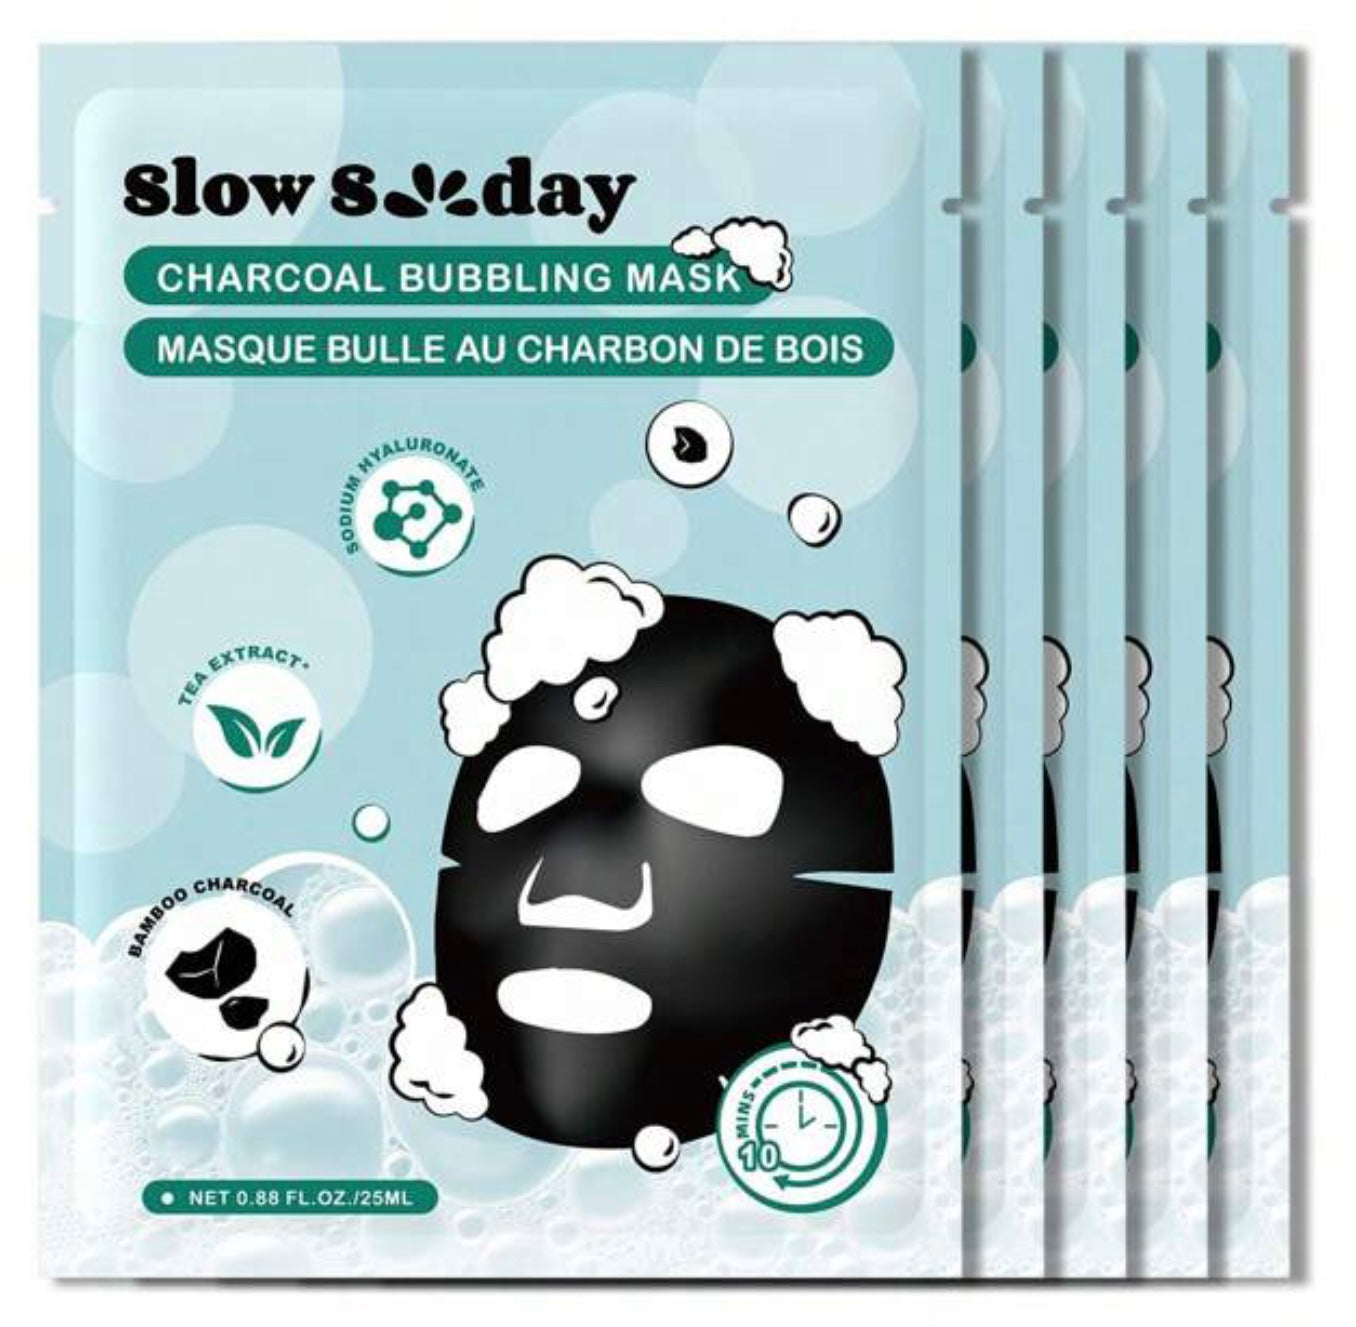 Slow Sunday Foaming Charcoal Mask